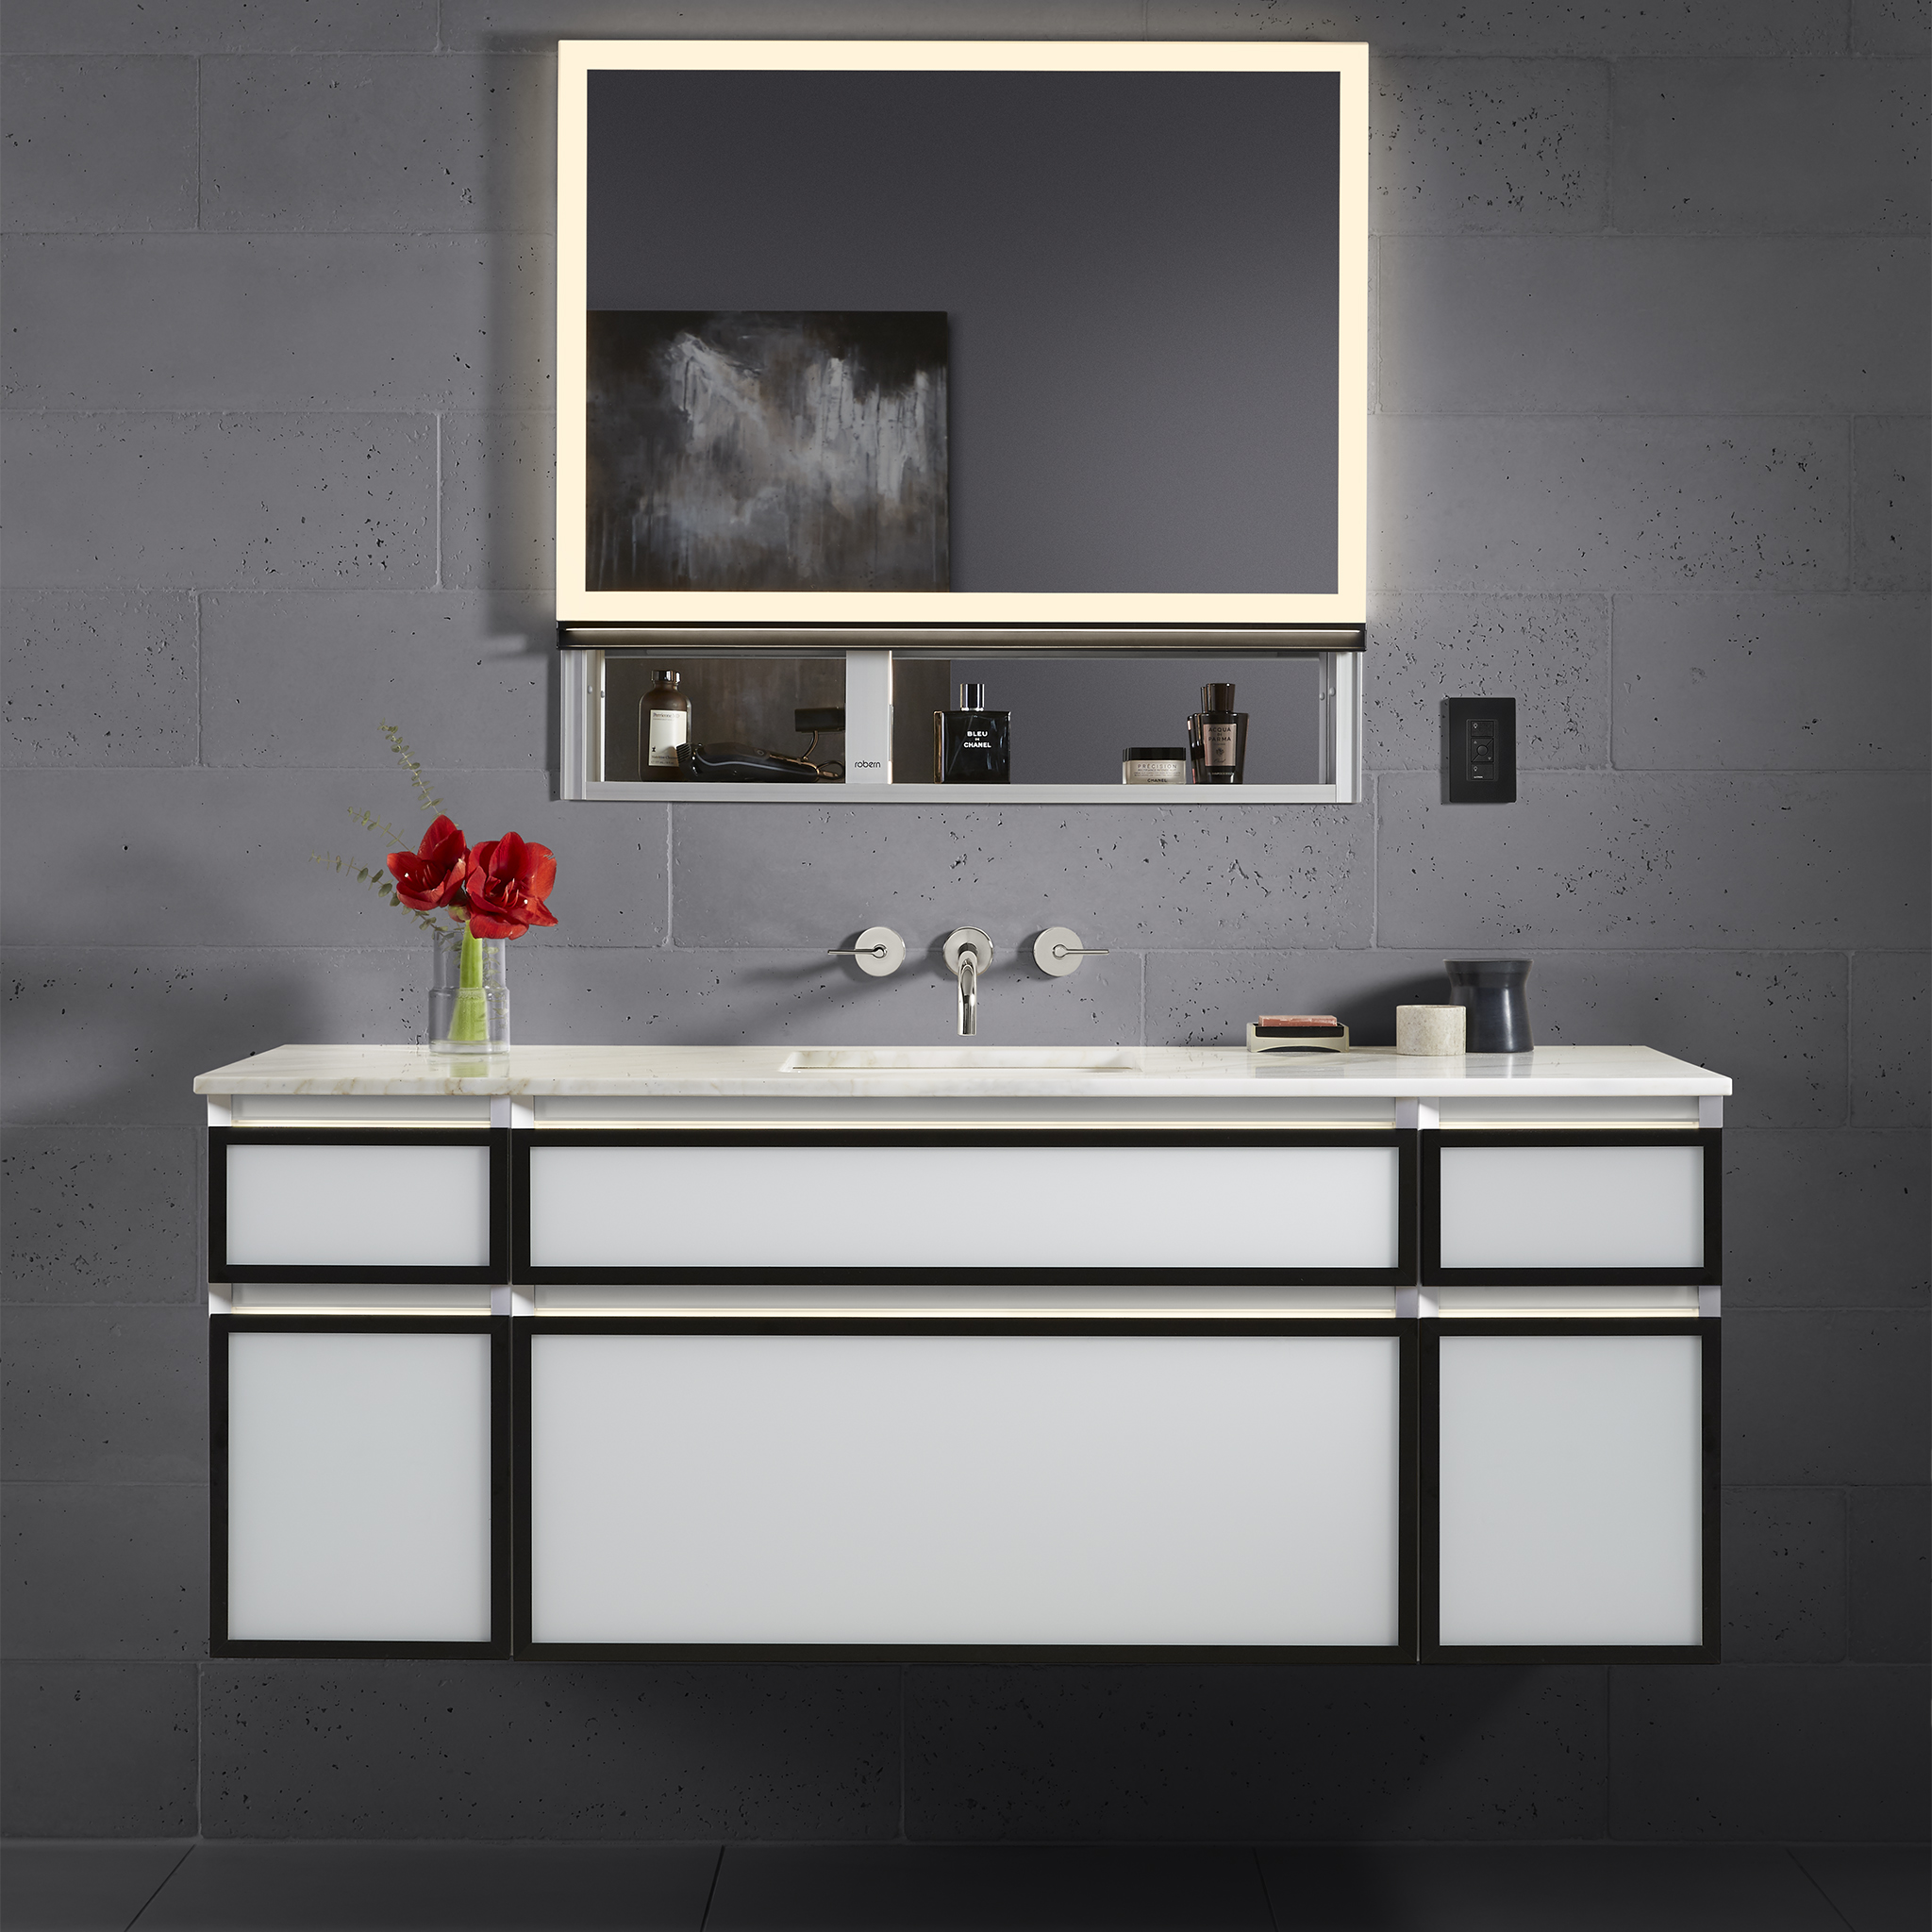 iF Design - Harmony series Liftable bathroom cabinet